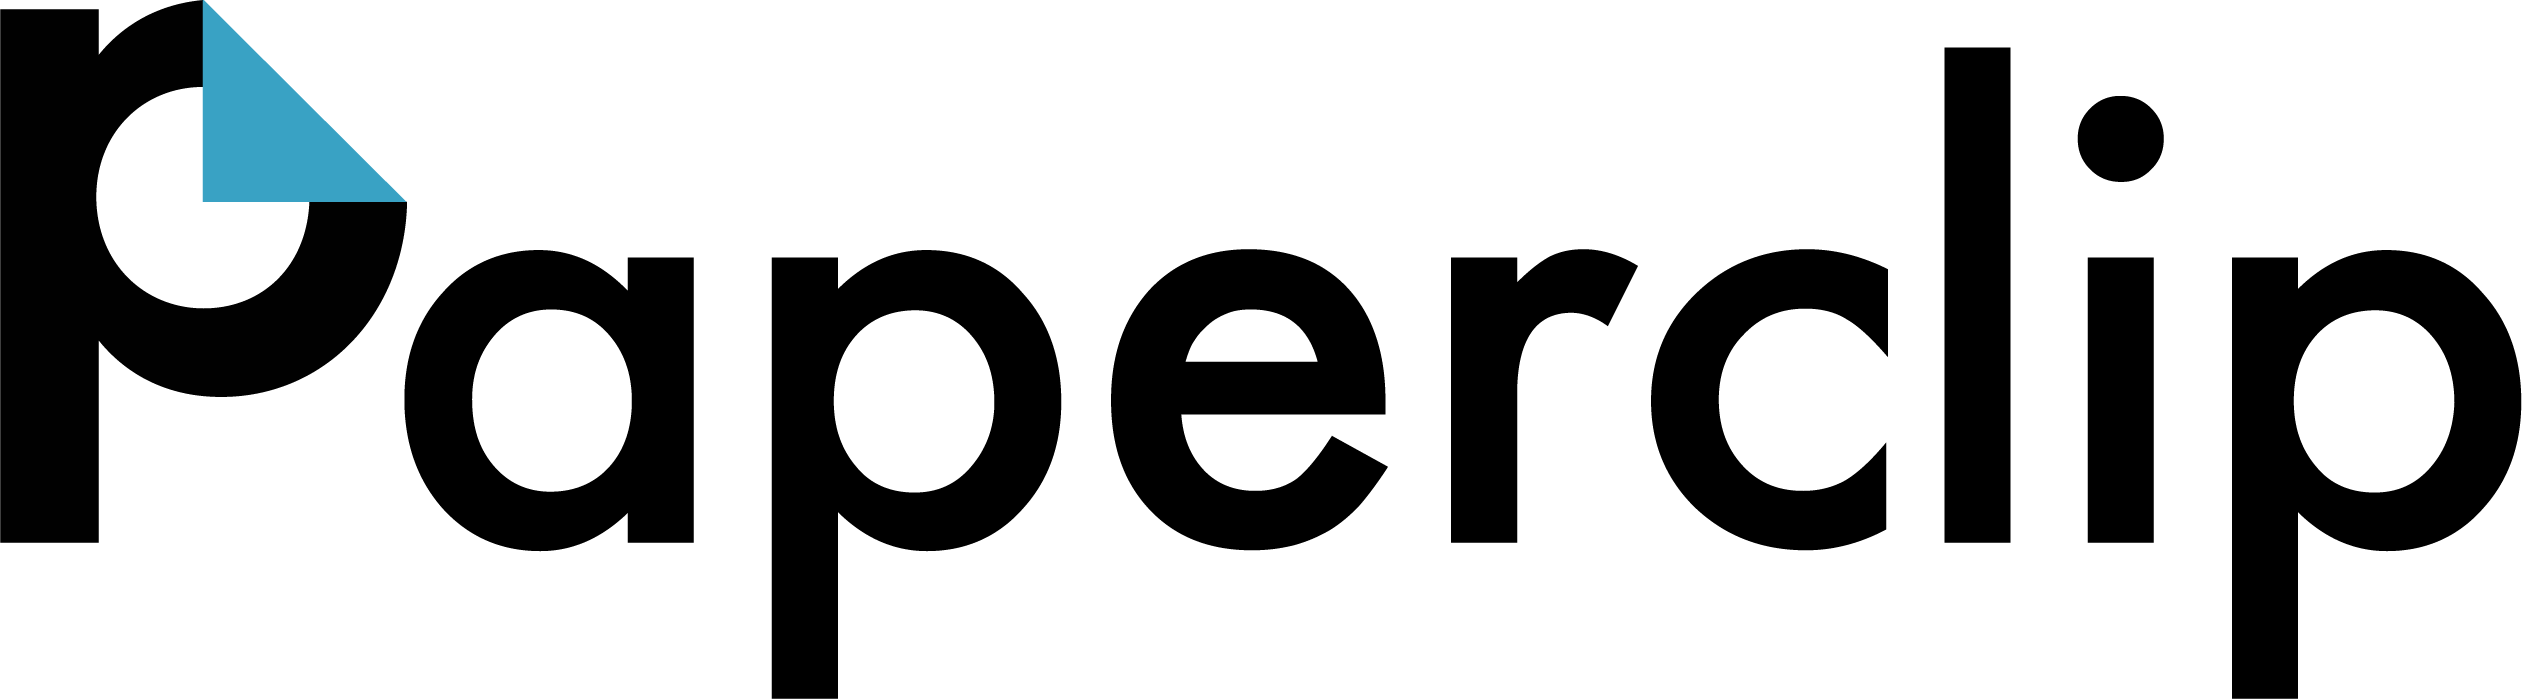 Paperclip Logo